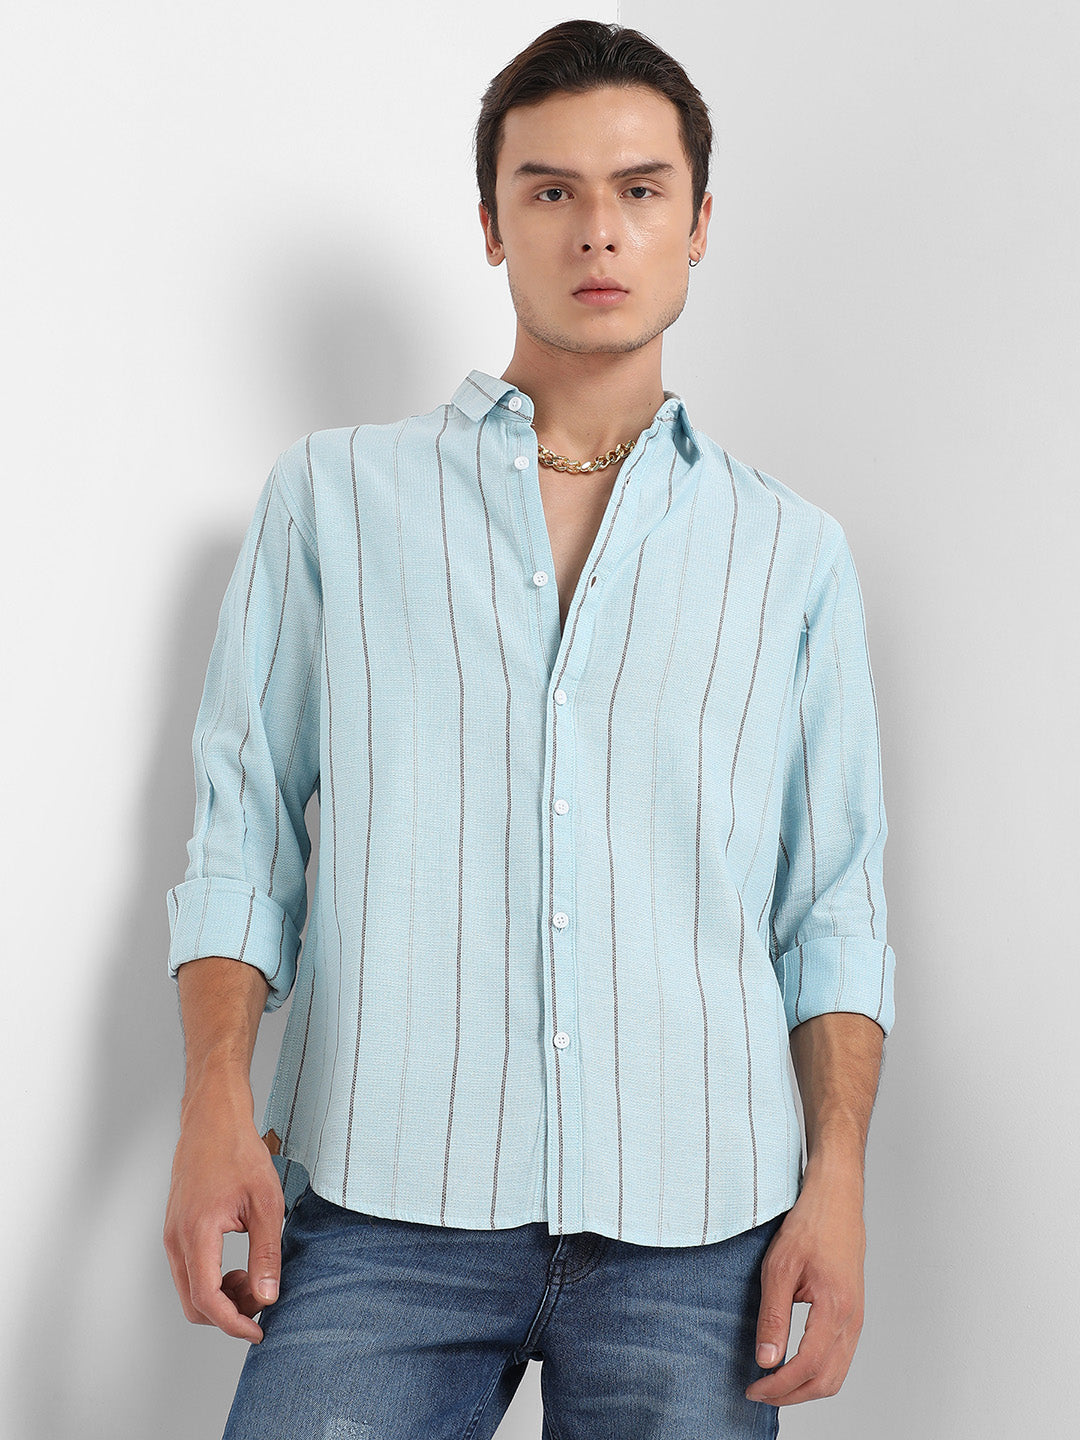 Contrast Pinstriped Shirt